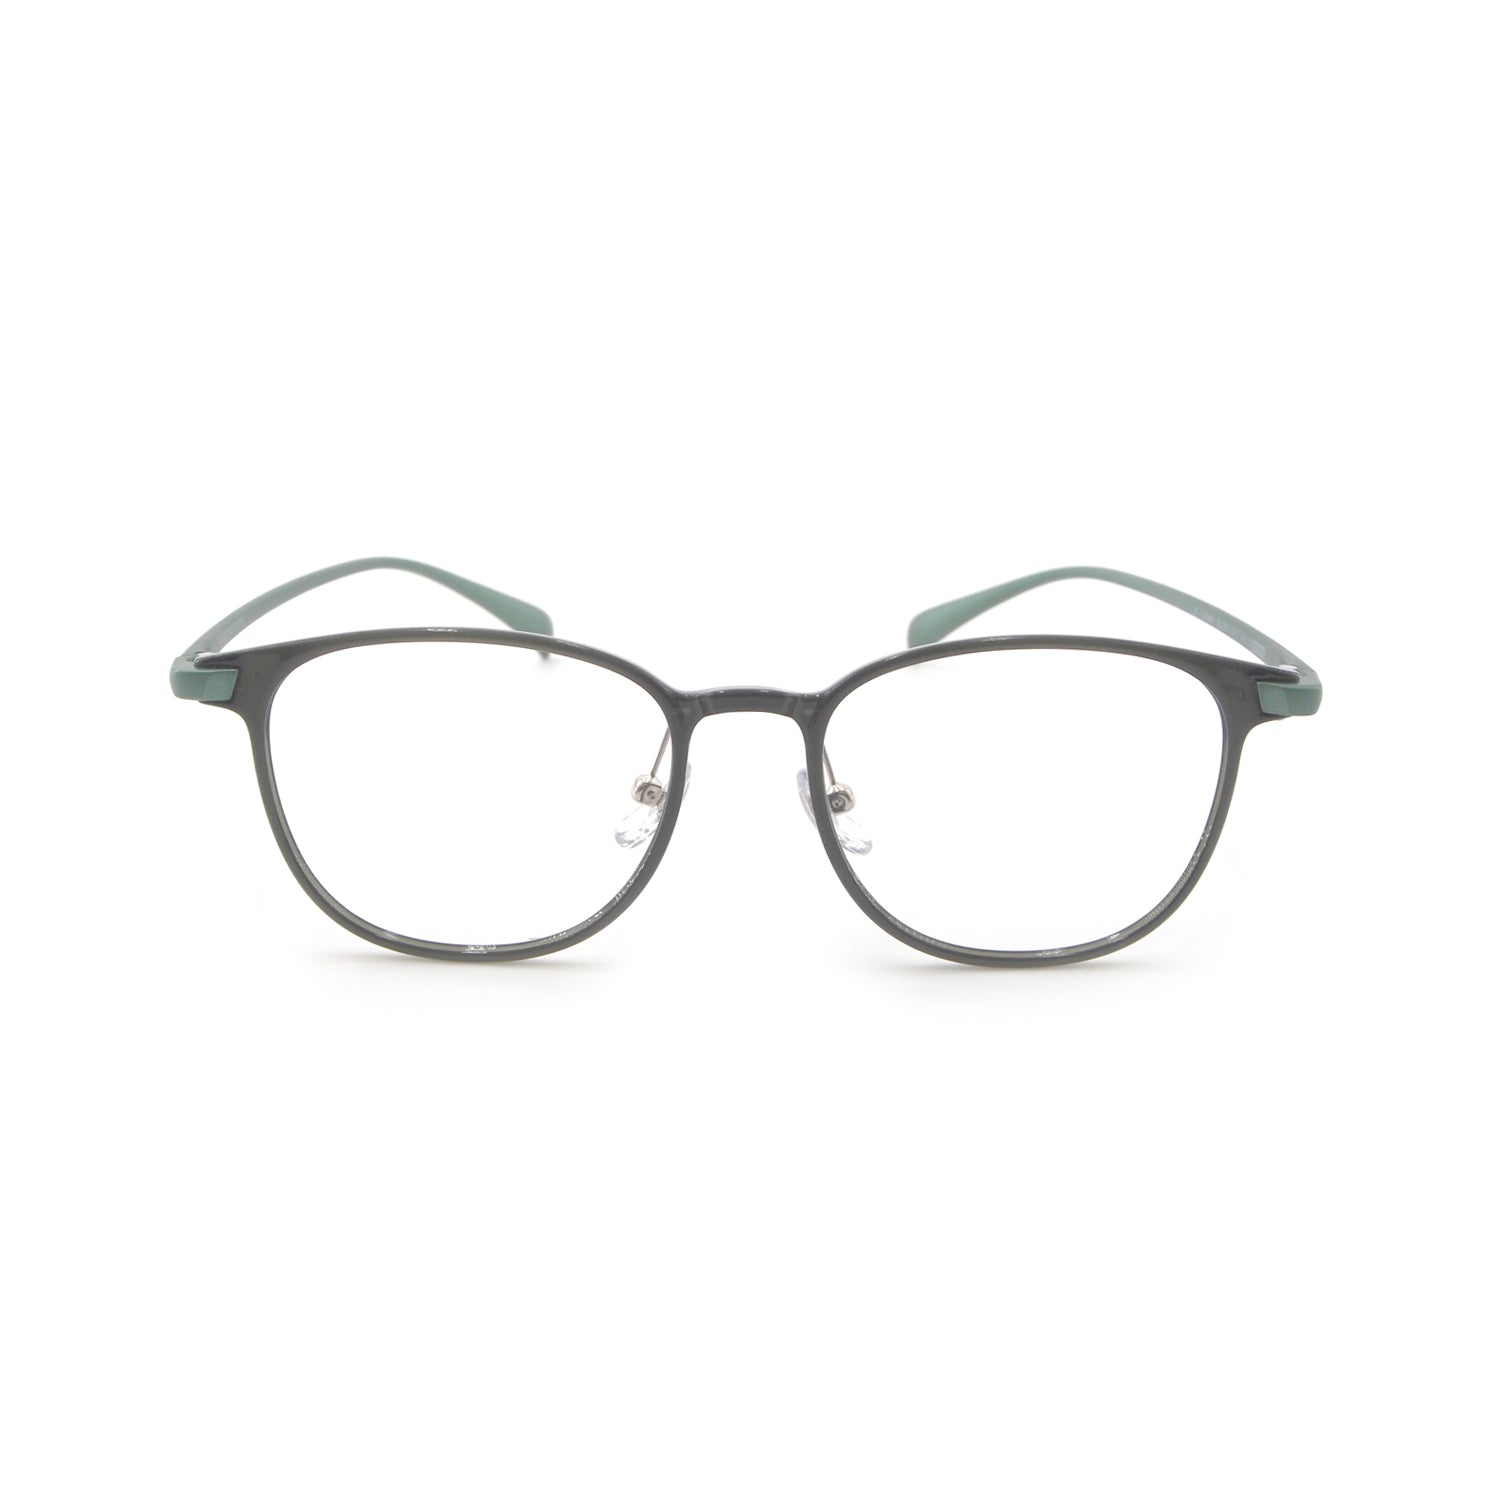 Tramontana in Sherwood Mint Eyeglasses - sightonomy